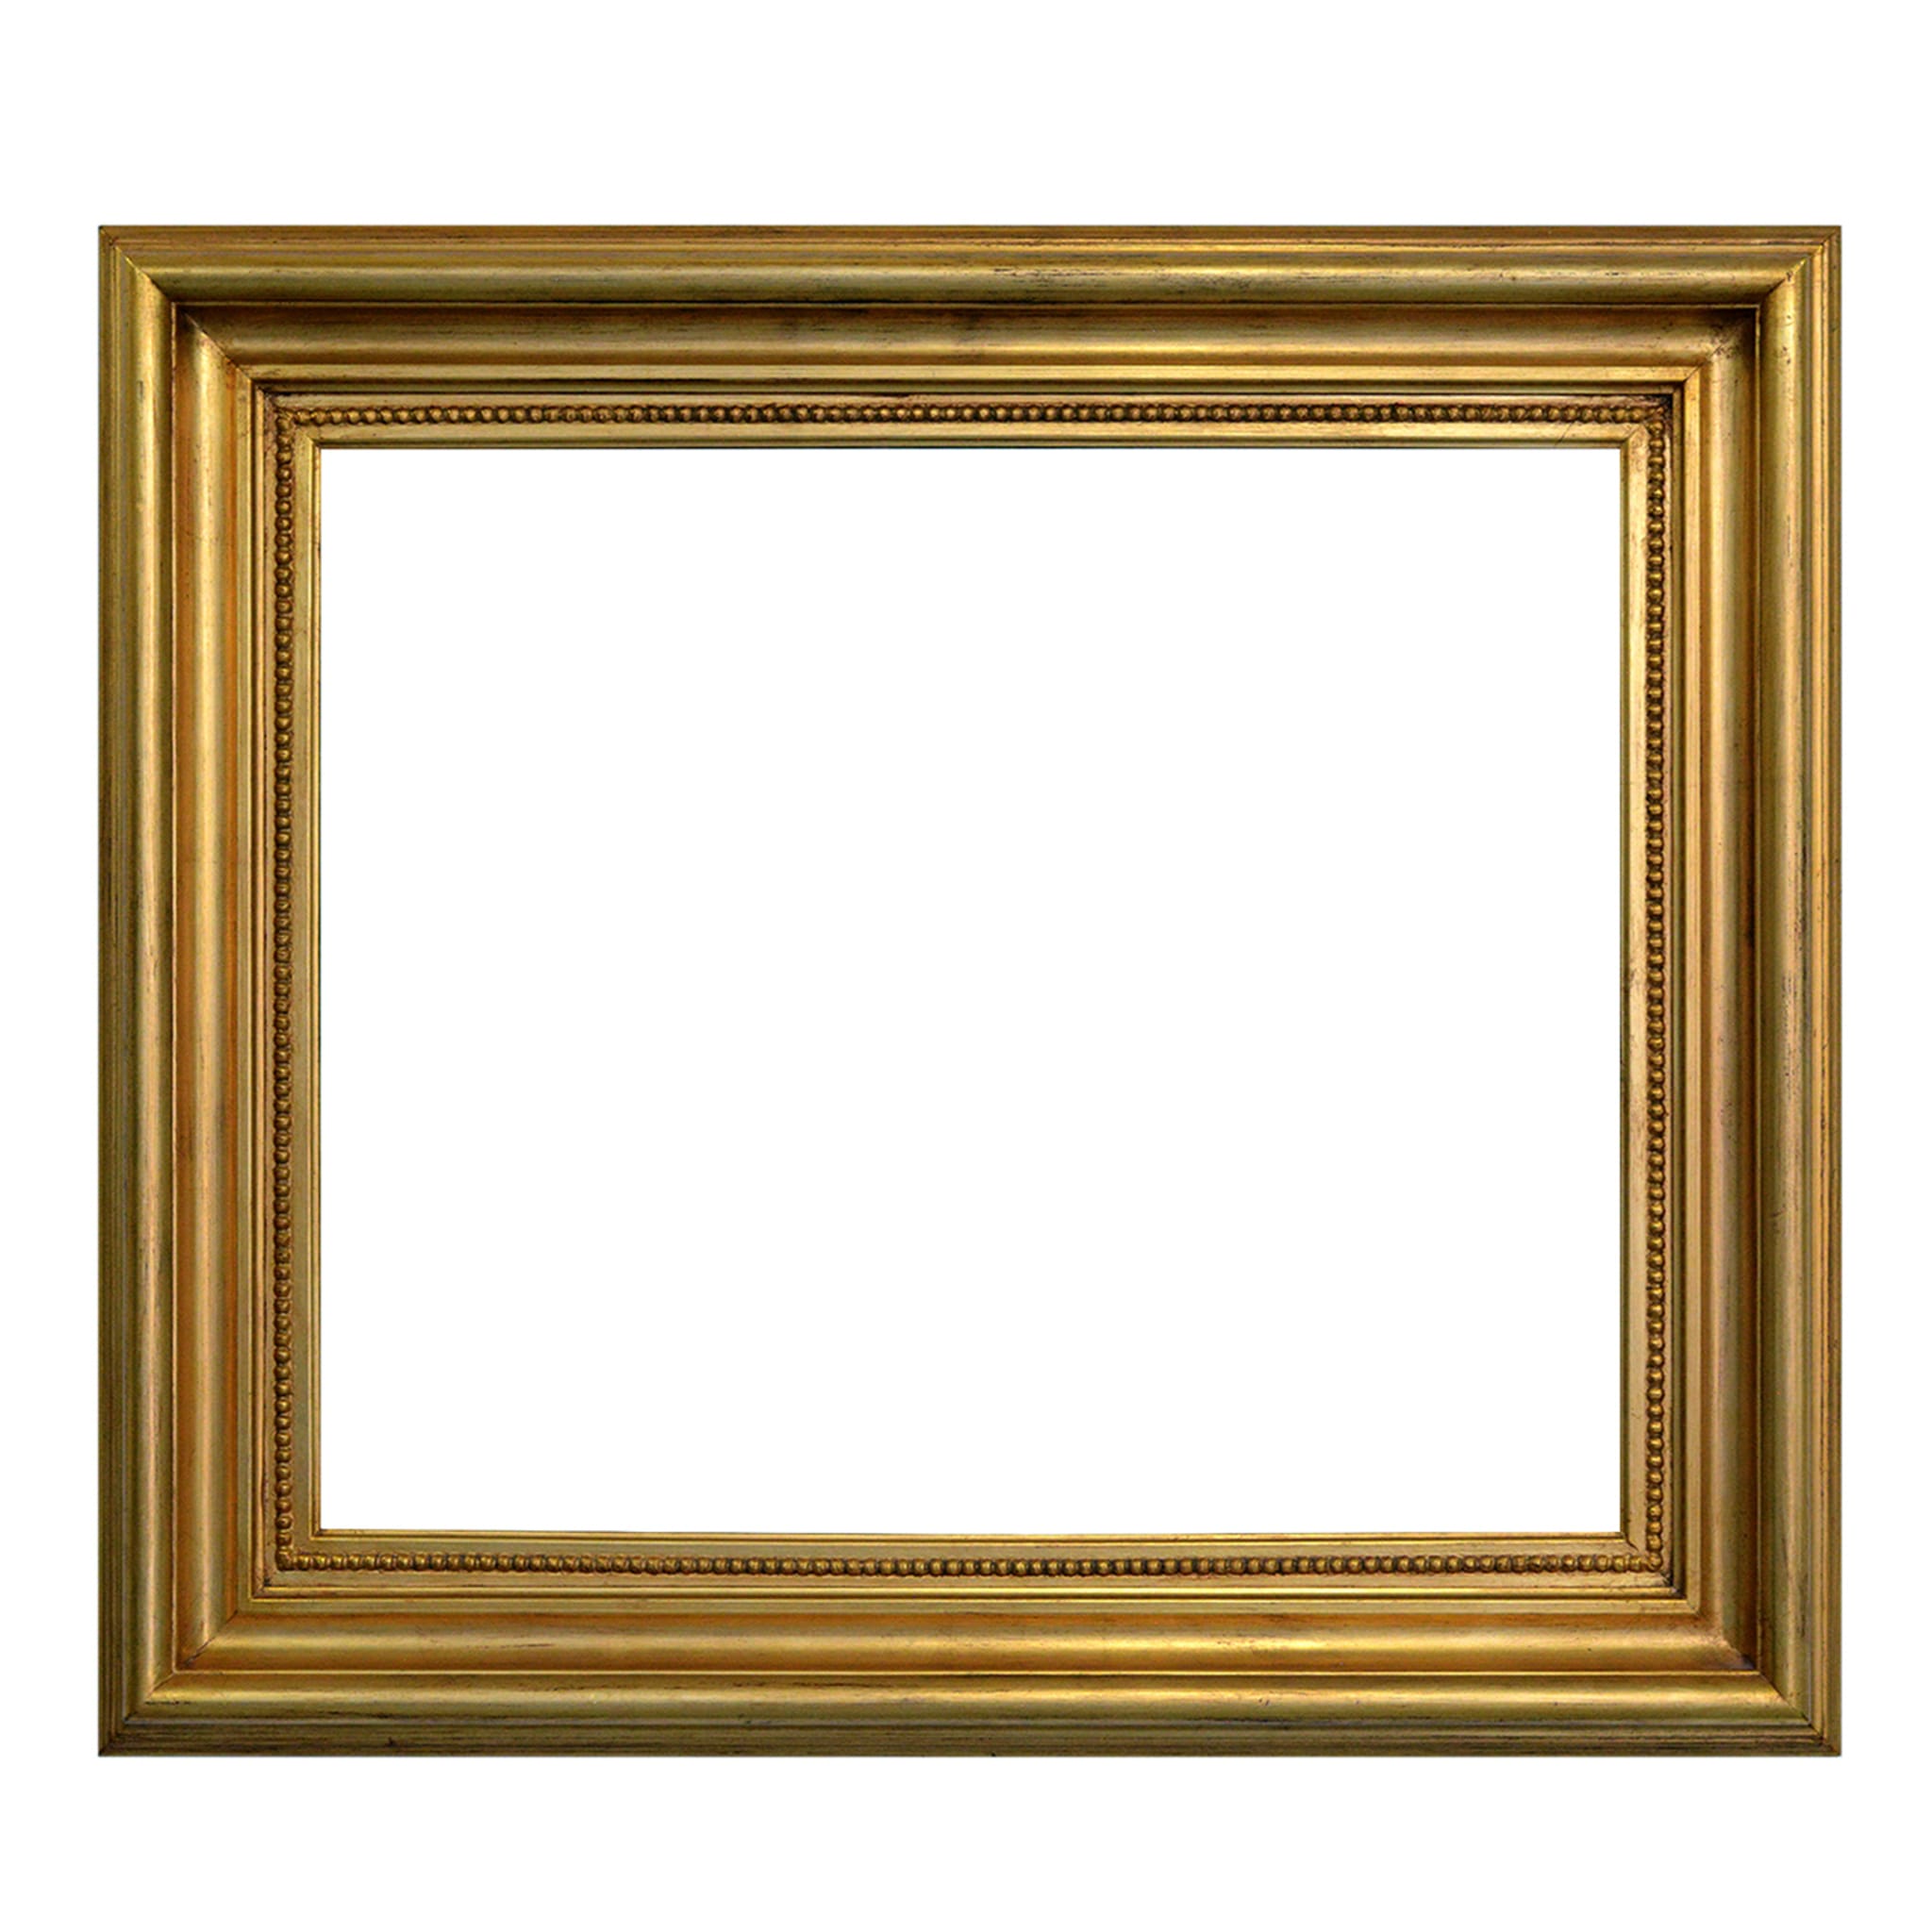 Salvator Rosa Frame #1 - Main view